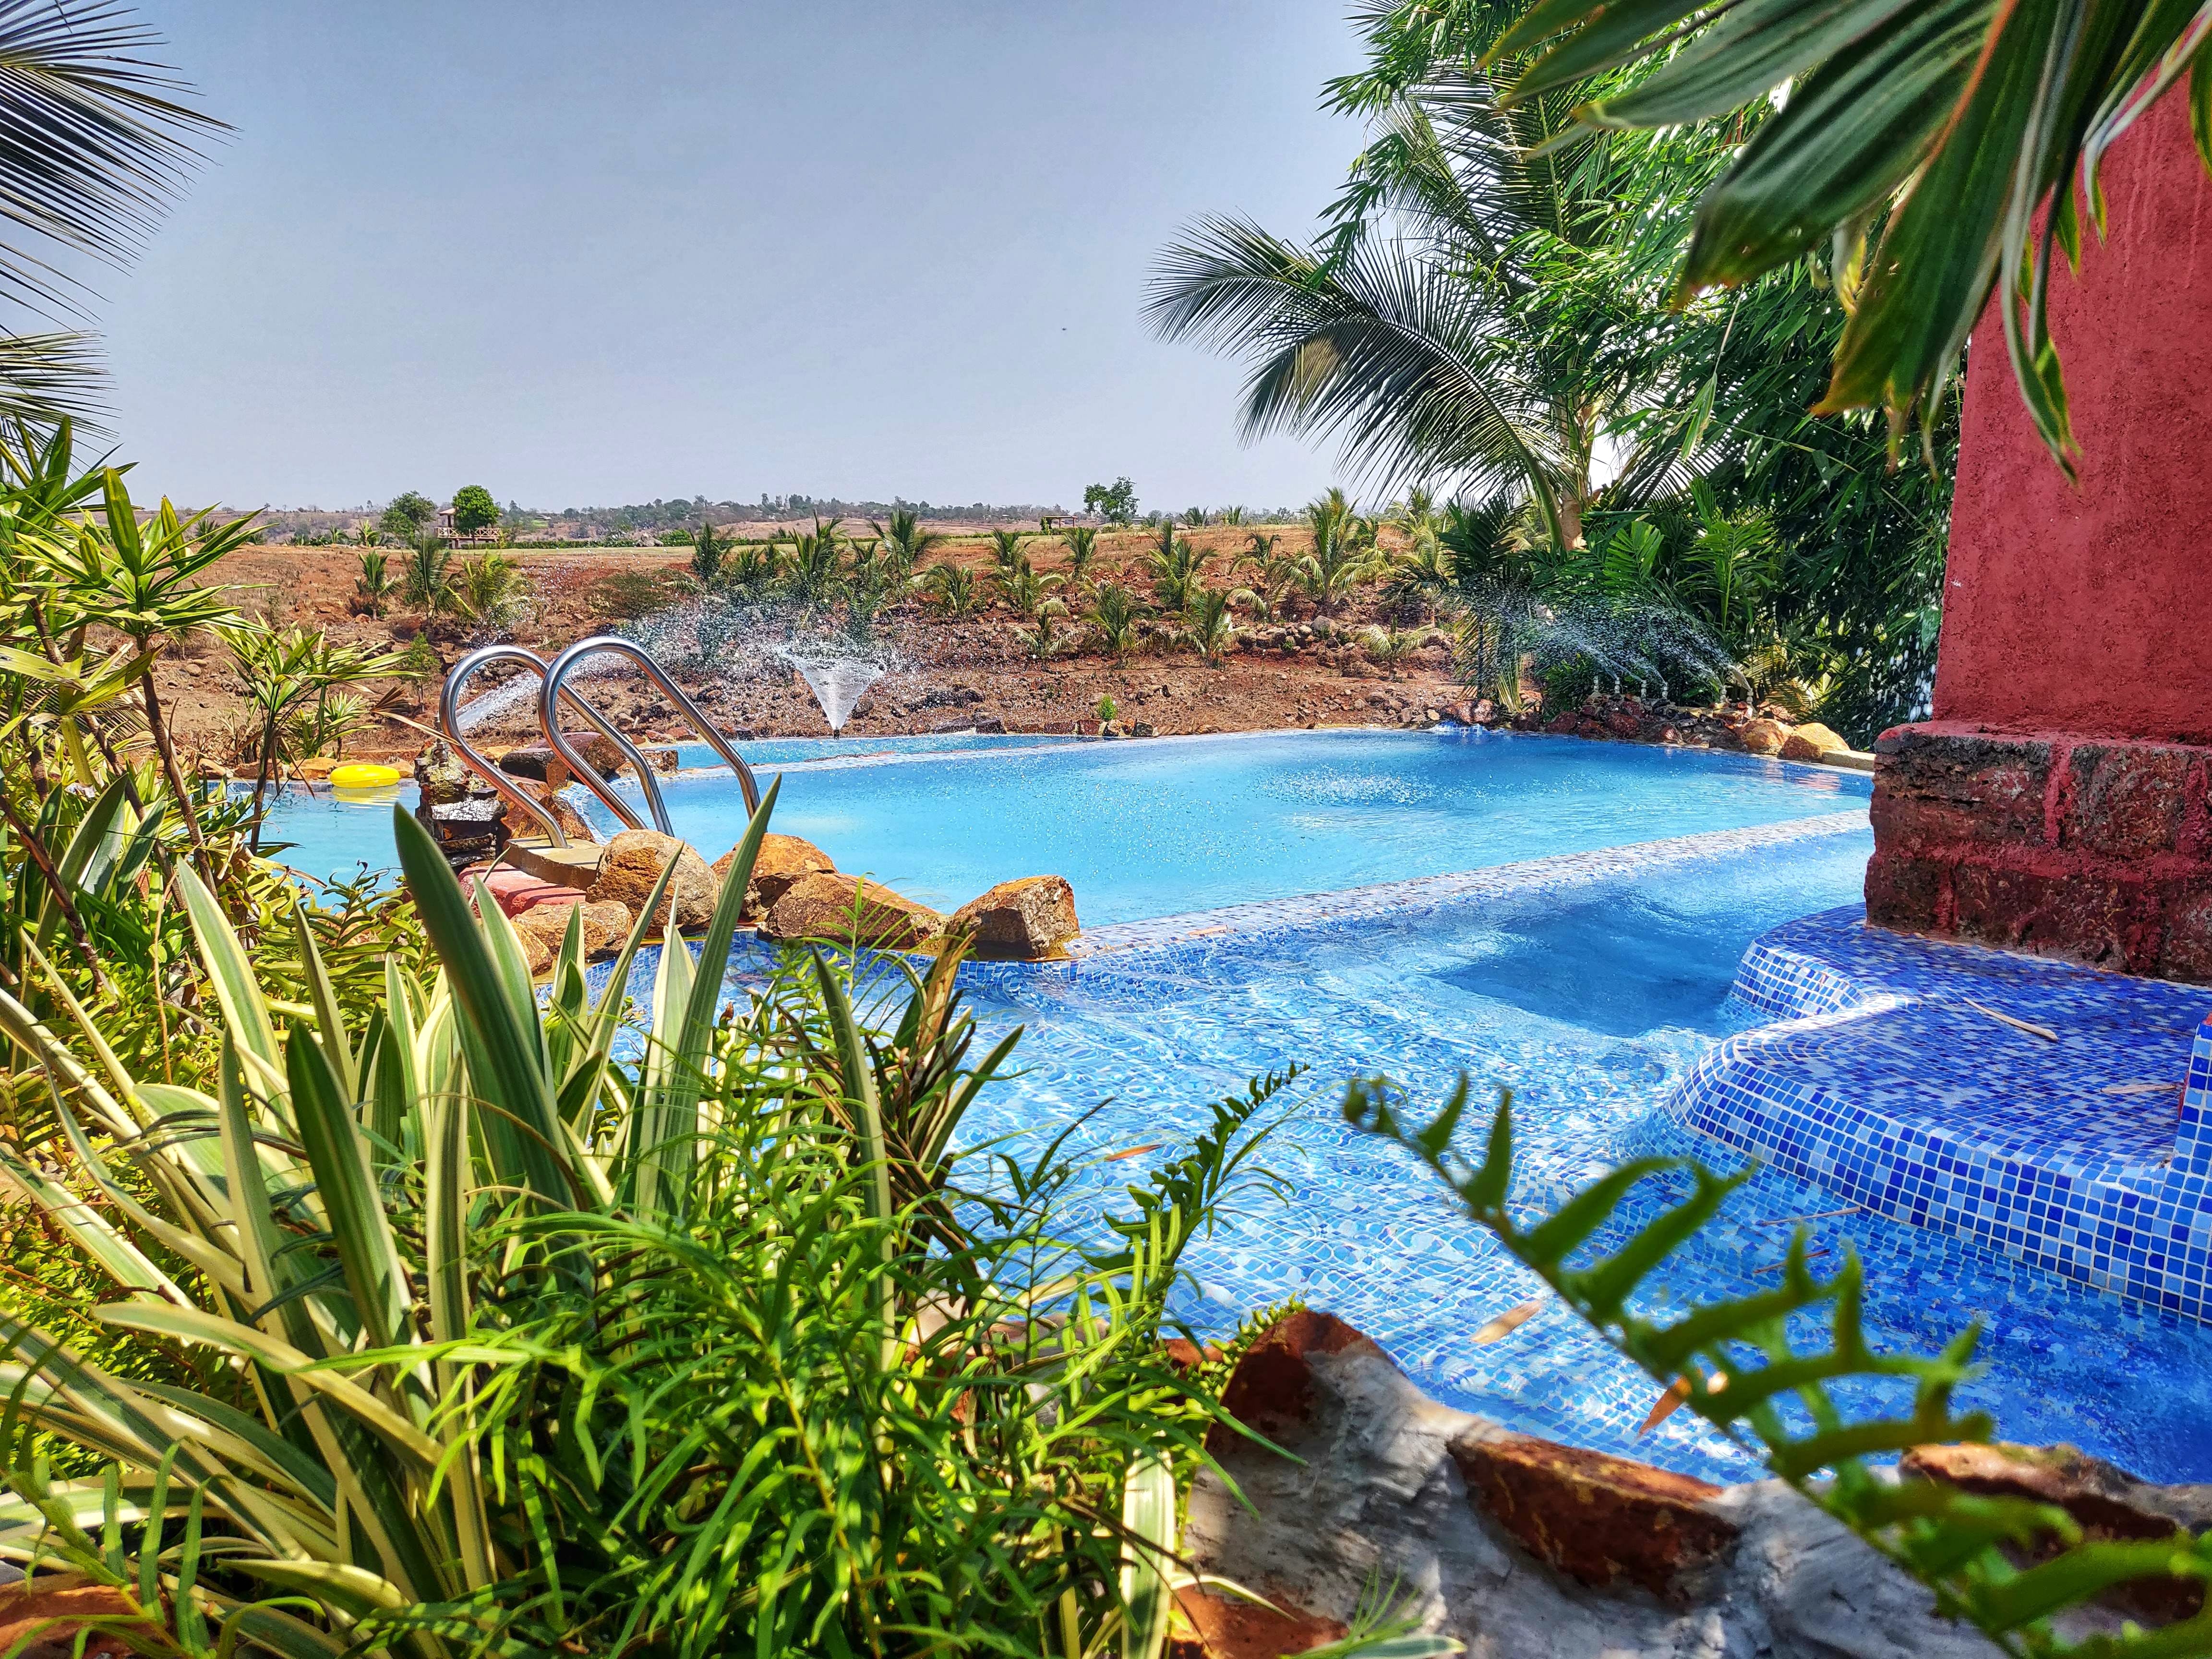 Swimming pool,Natural landscape,Vegetation,Majorelle blue,Azure,Resort,Property,Palm tree,Vacation,Water